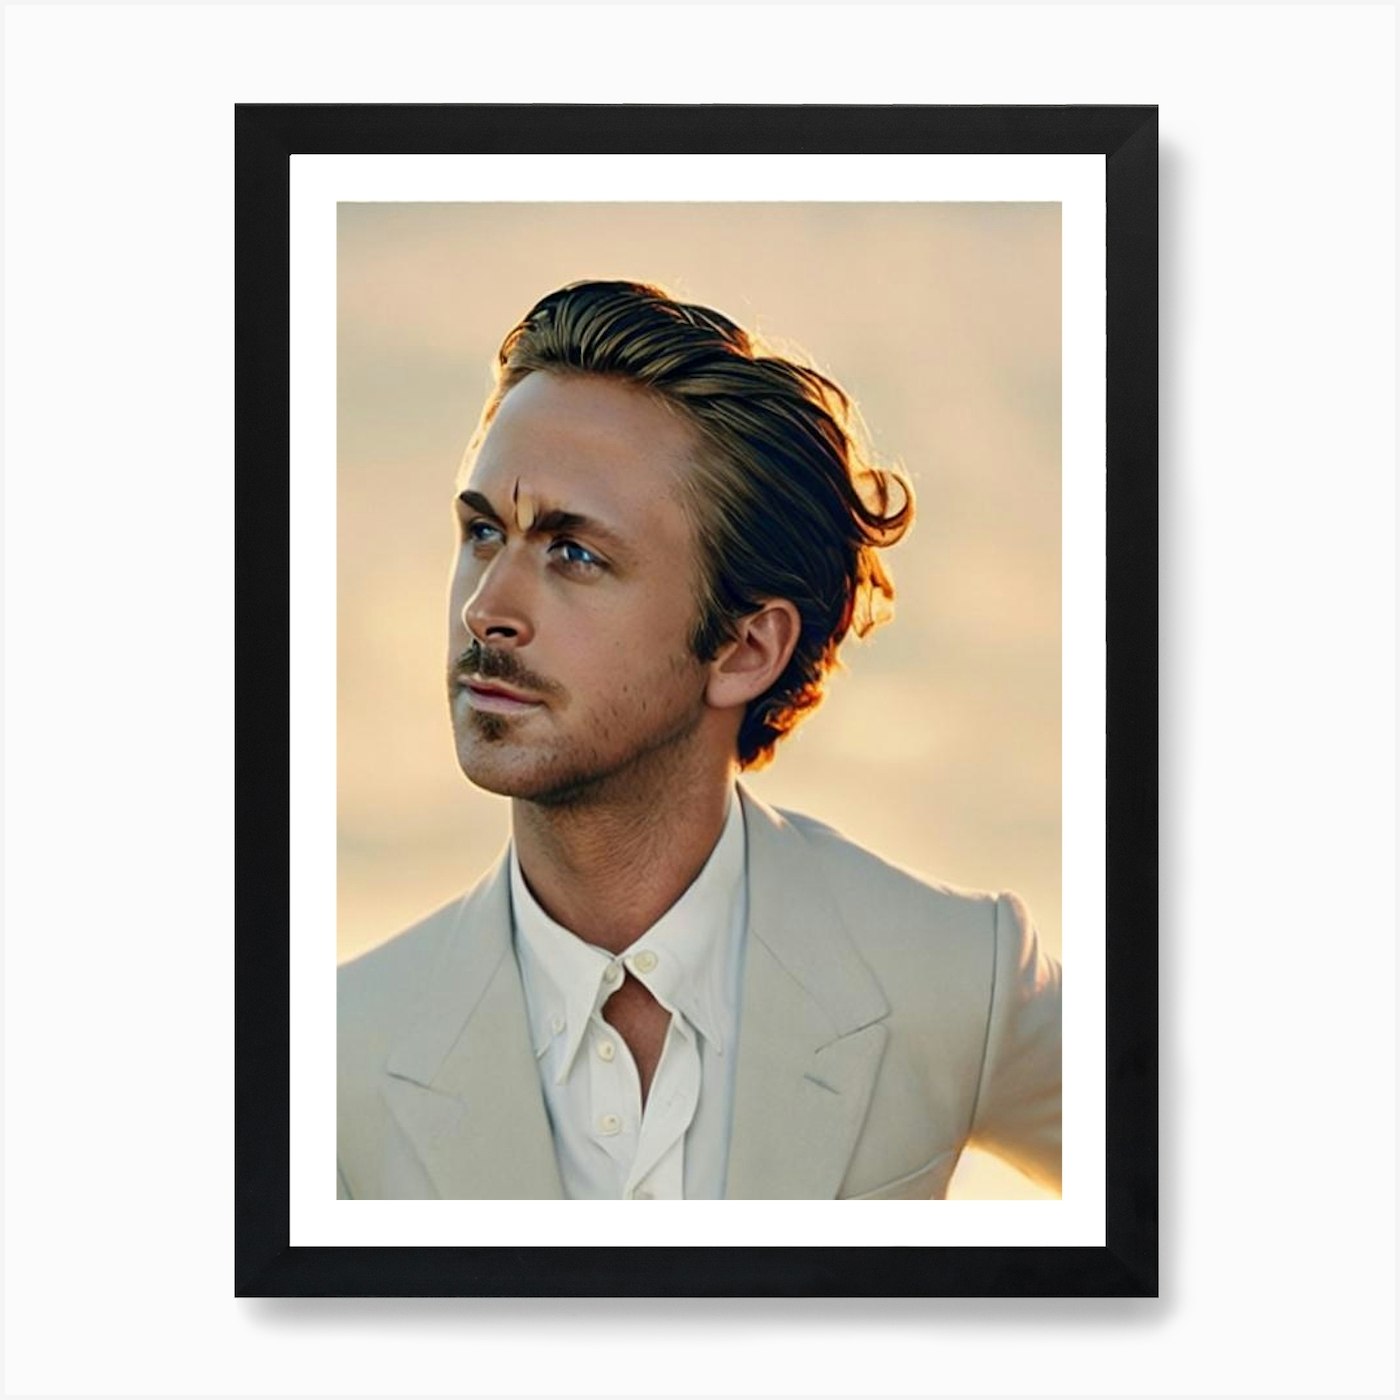 Ryan Gosling Photo Collage Pillowcase